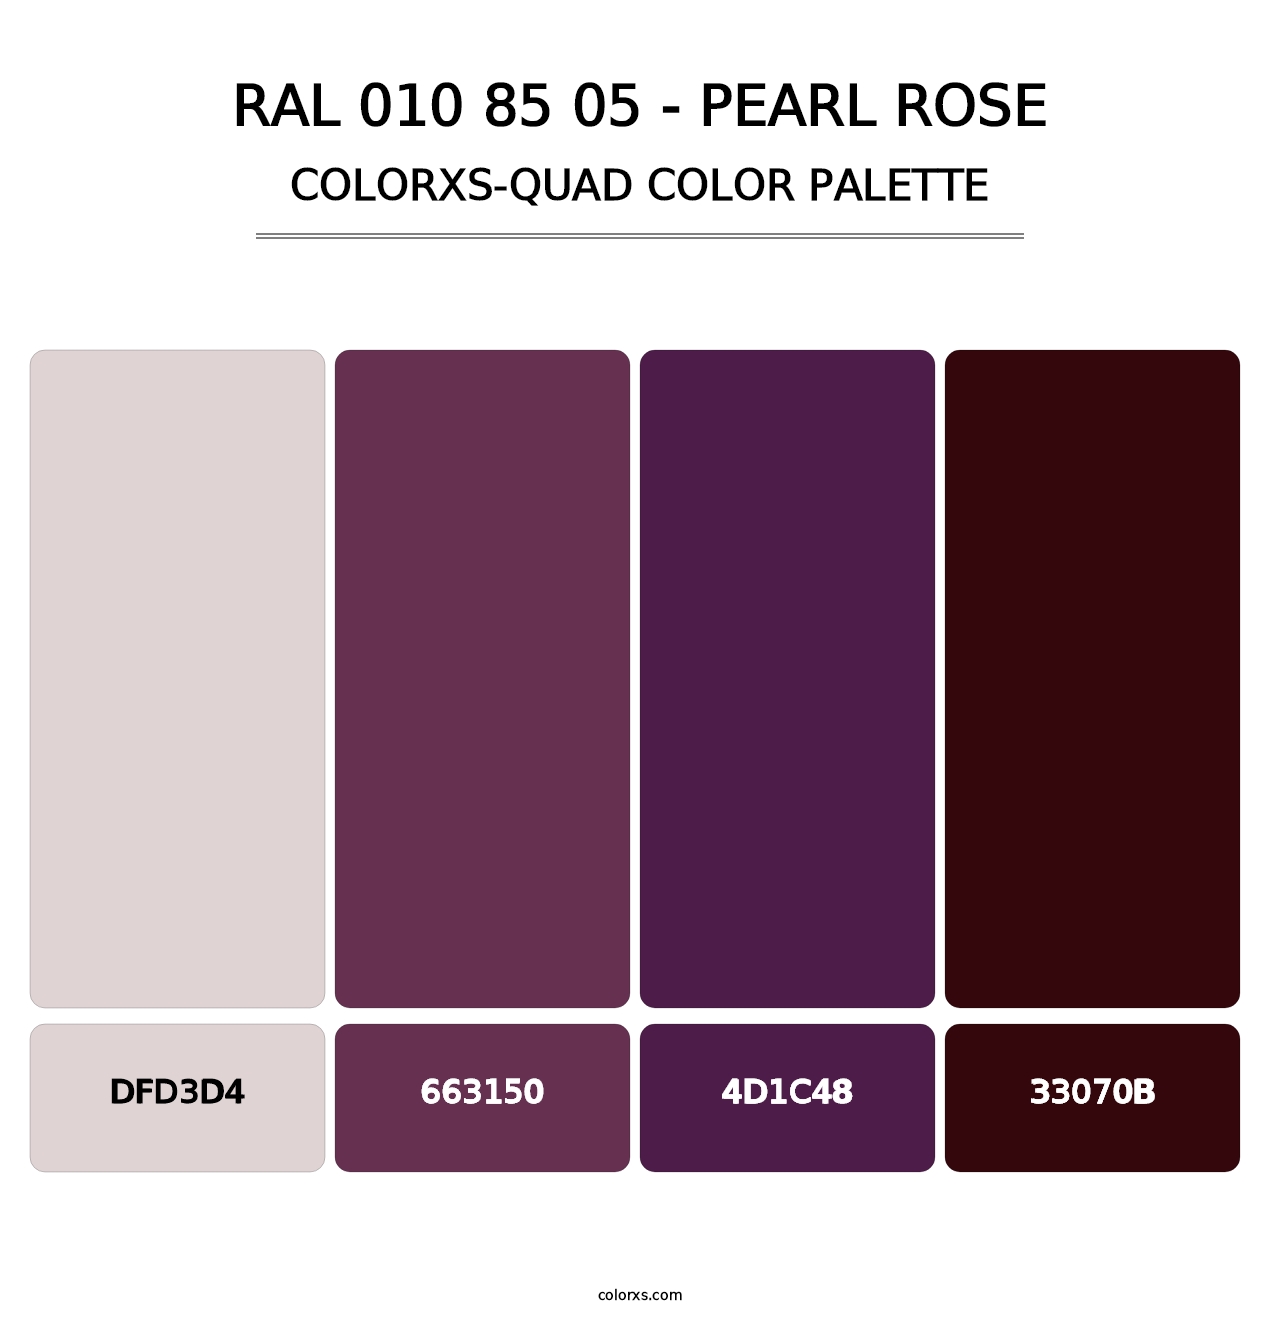 RAL 010 85 05 - Pearl Rose - Colorxs Quad Palette